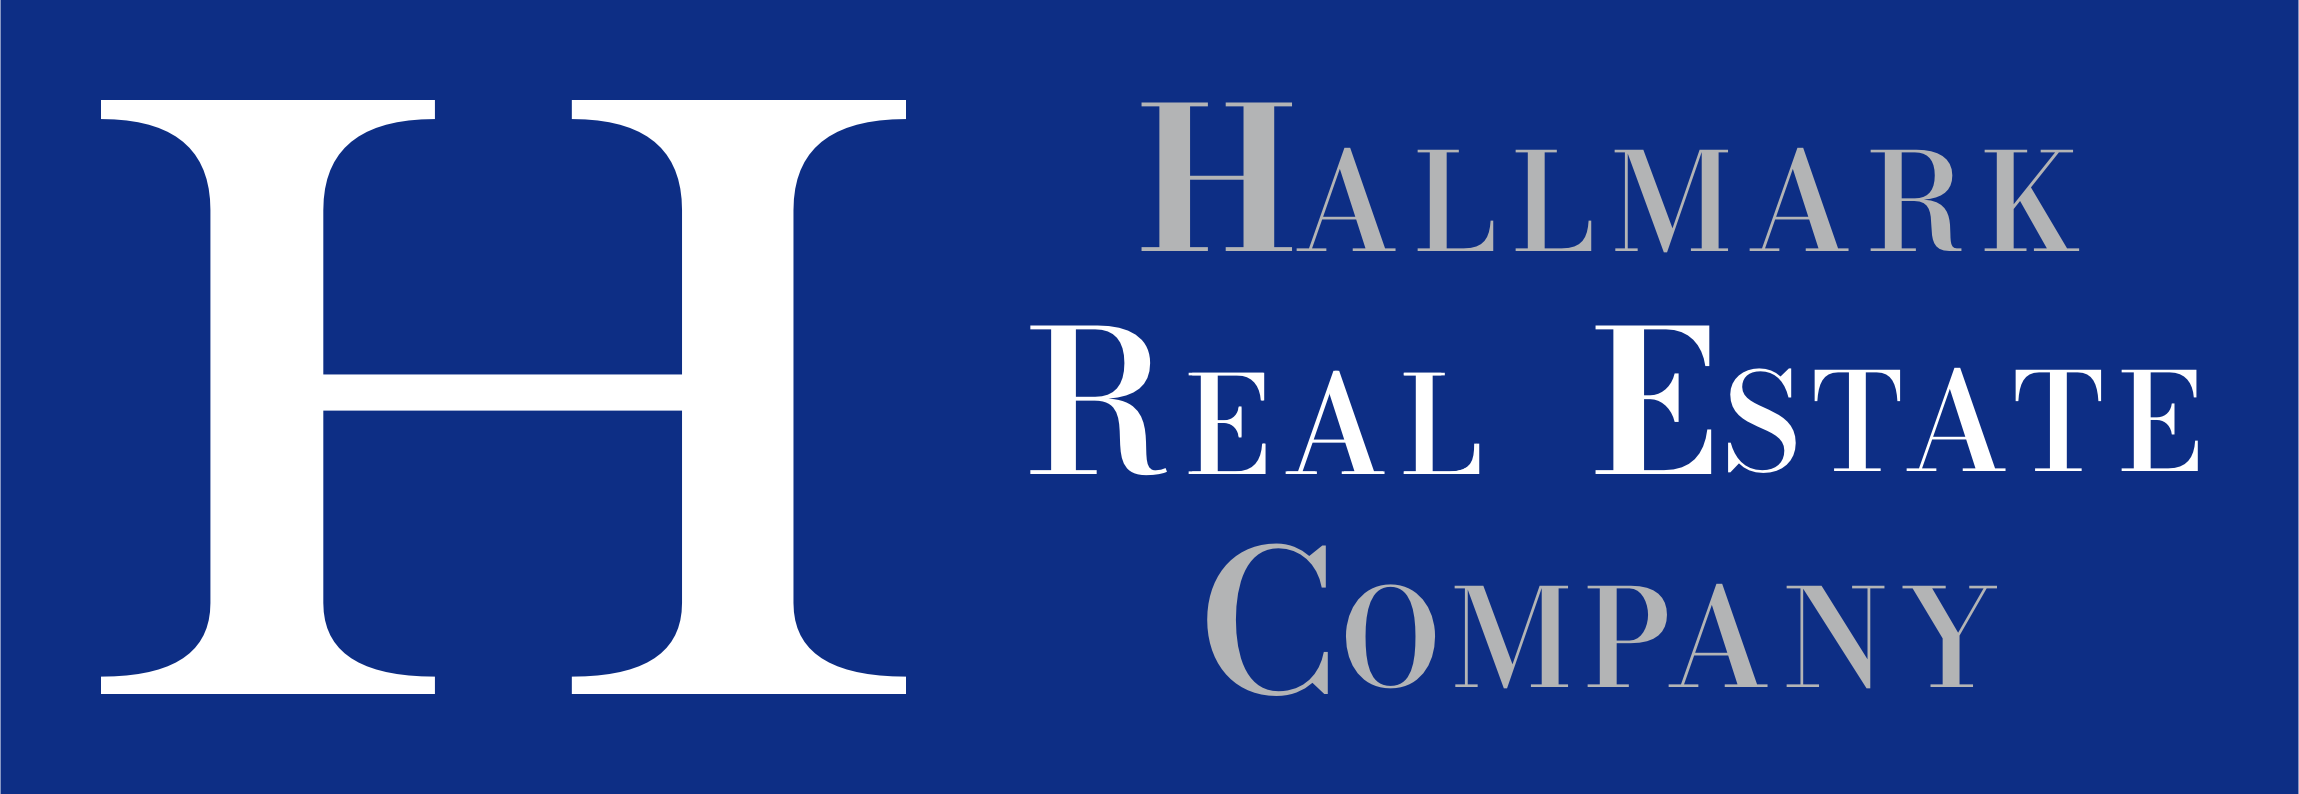 Hallmark Real Estate Company Logo